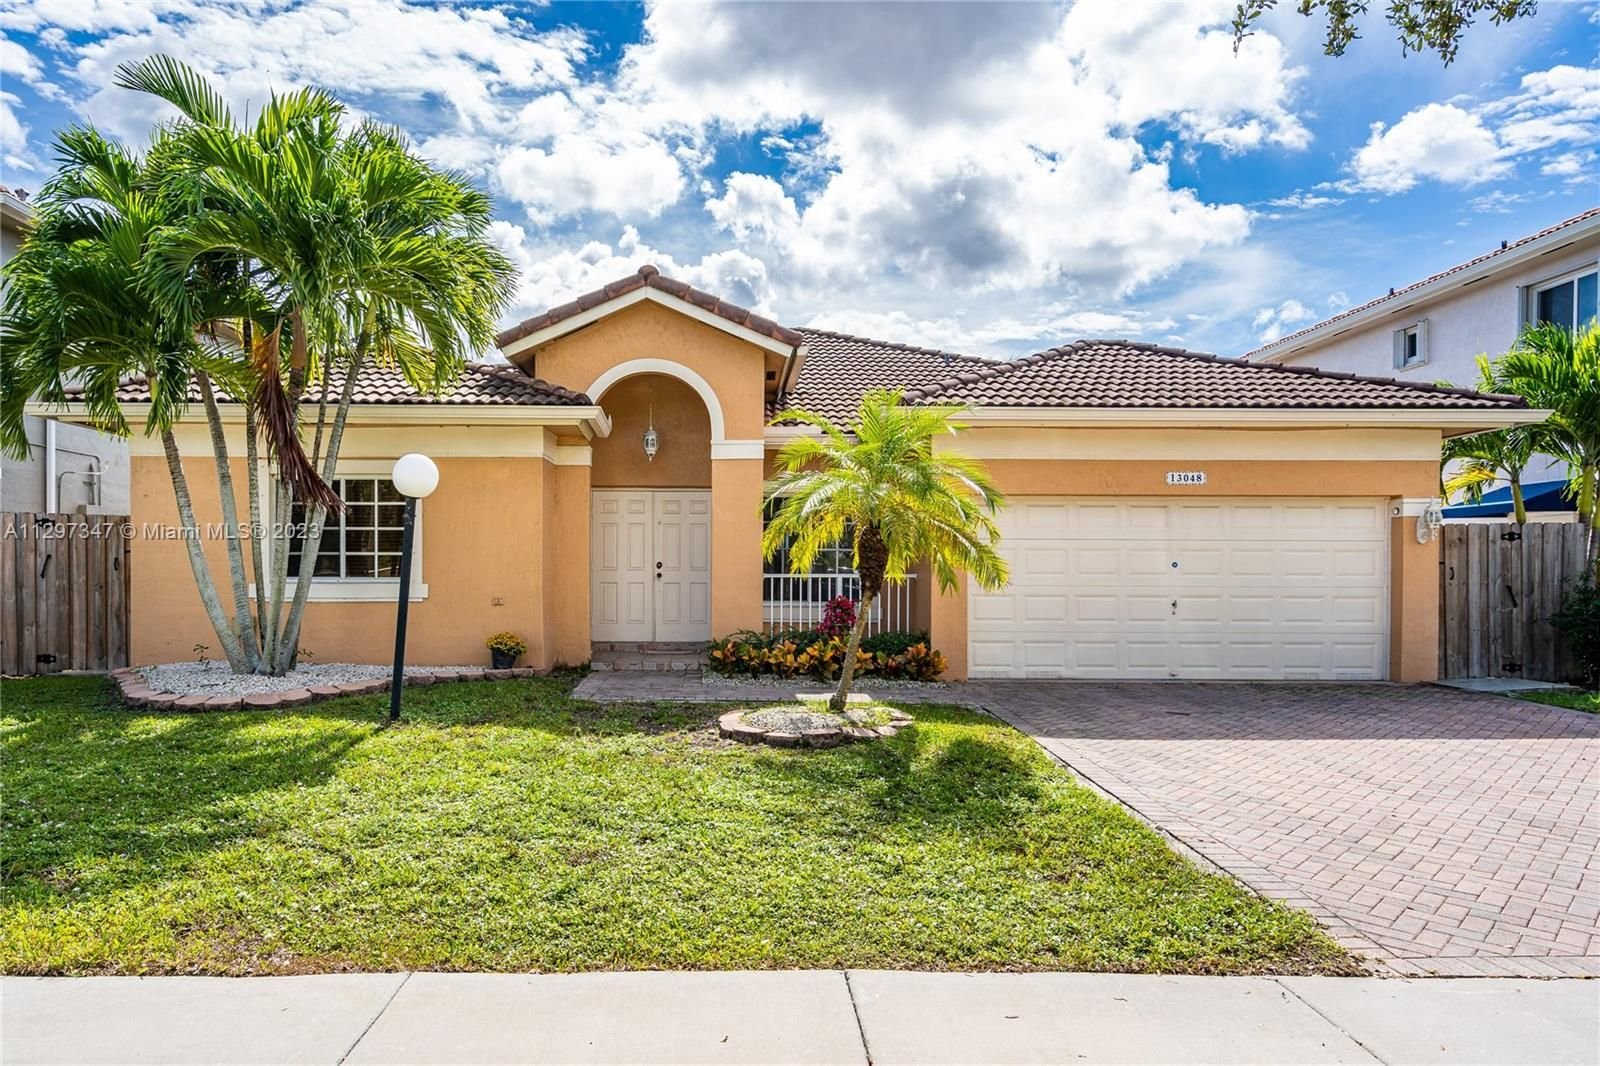 Real estate property located at 13048 136th Ter, Miami-Dade County, Miami, FL